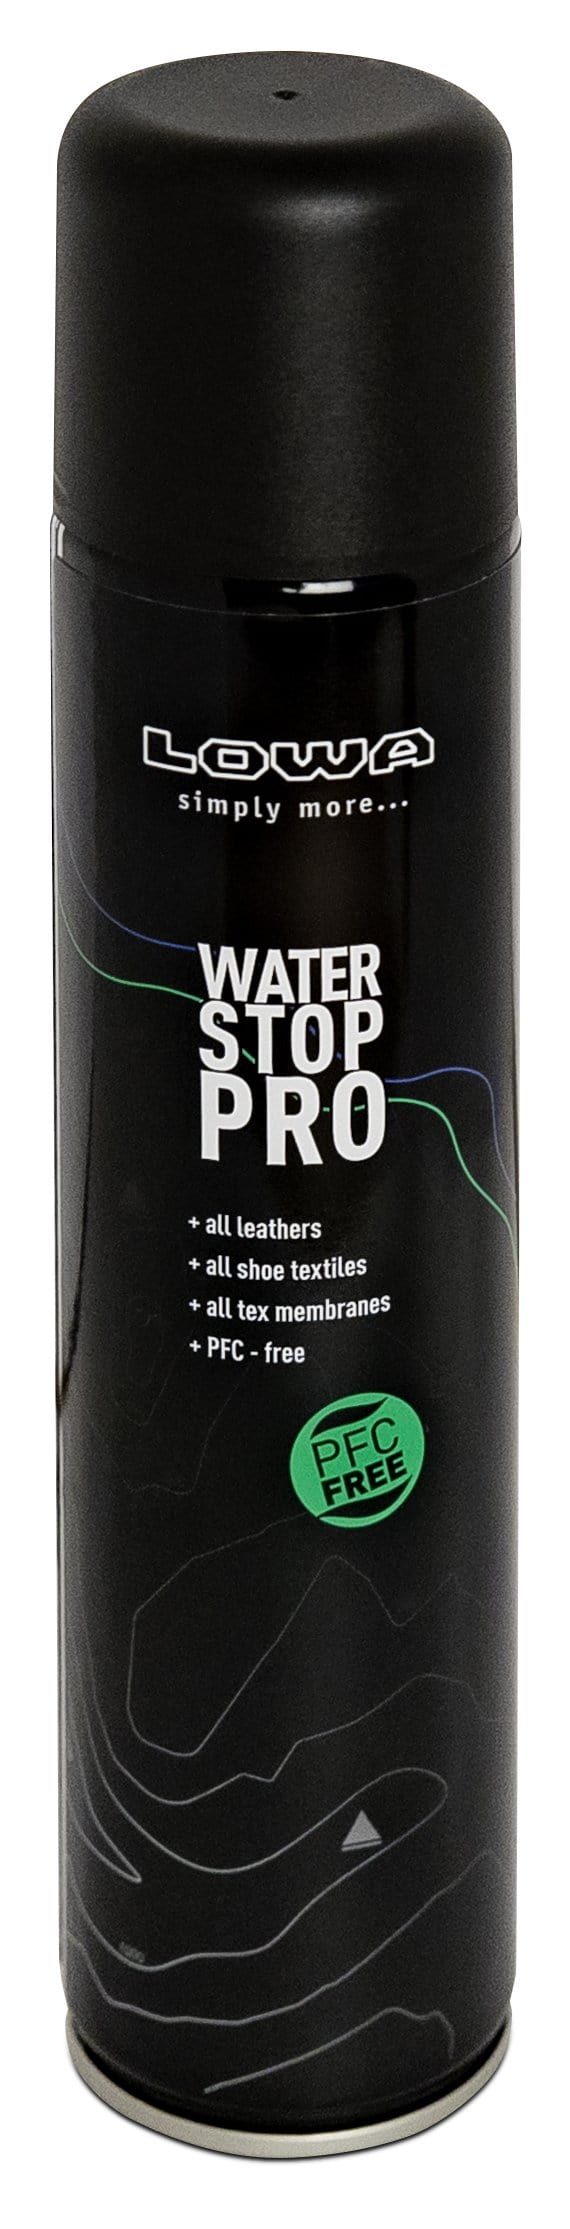 Lowa Water Stop Pro